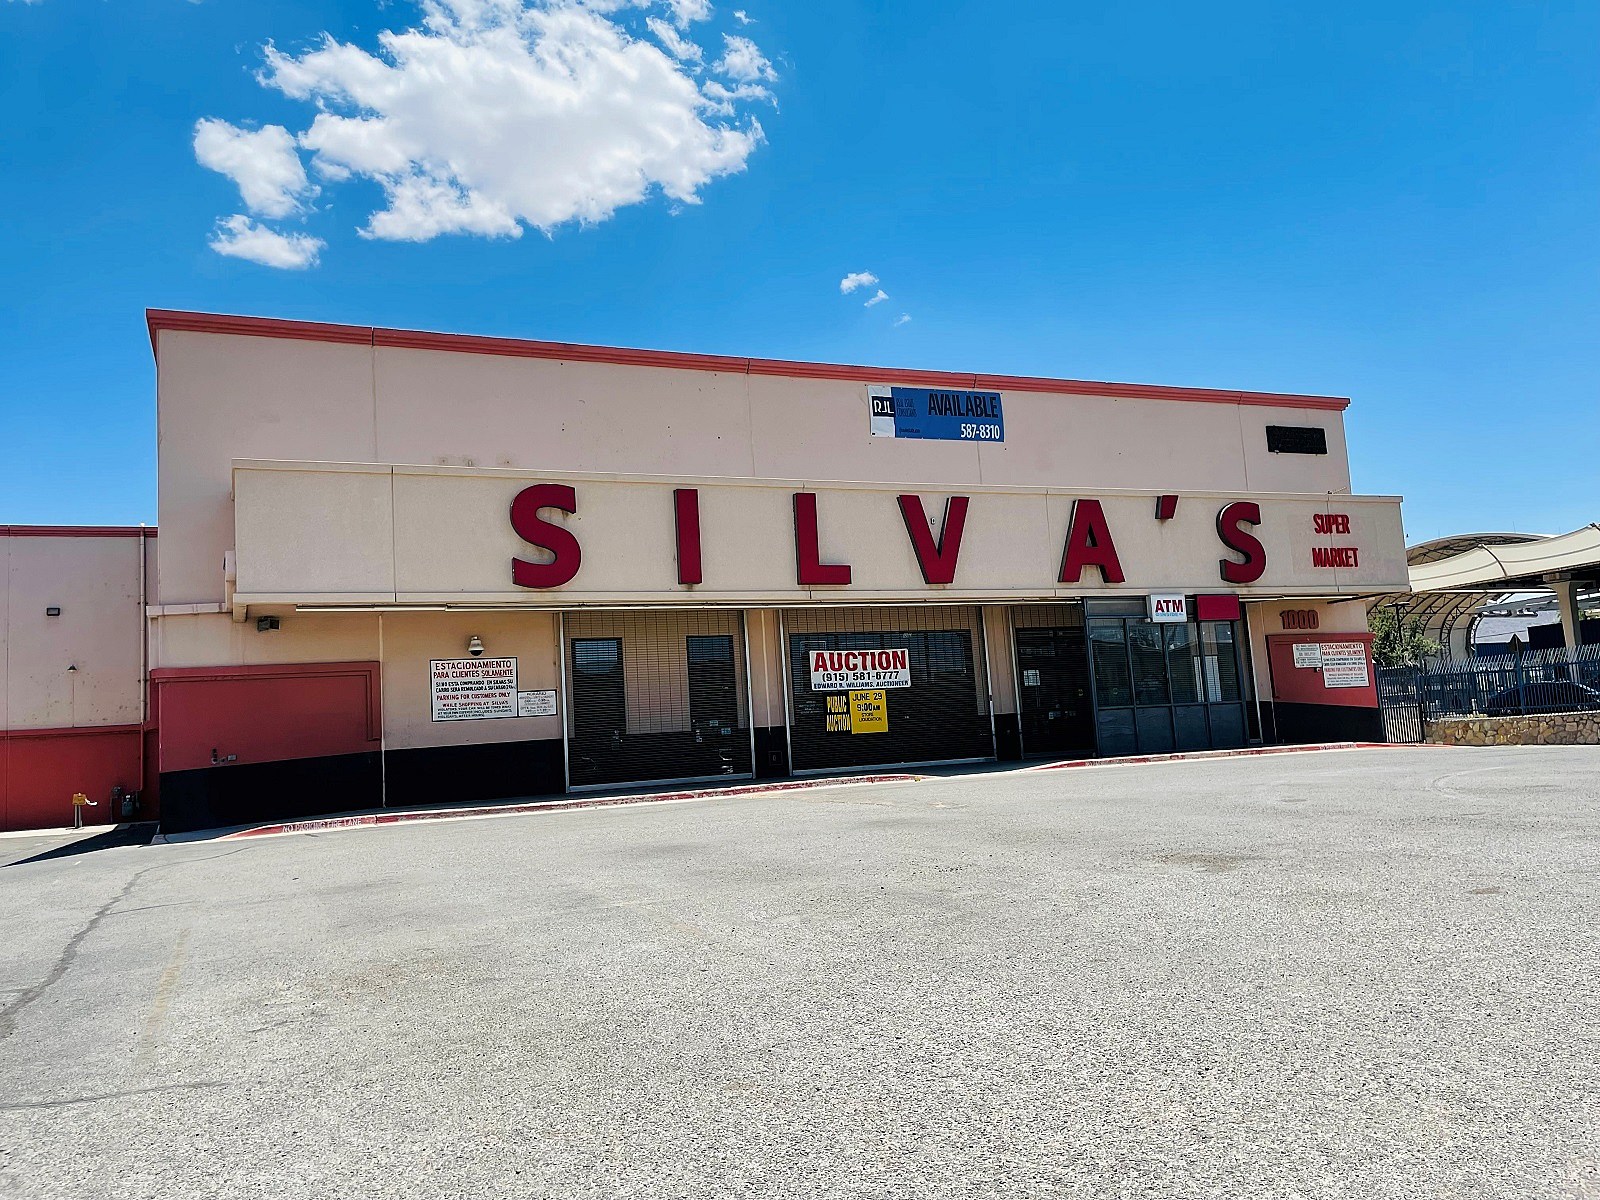 99 store will open at former Silva's Super Market location in El